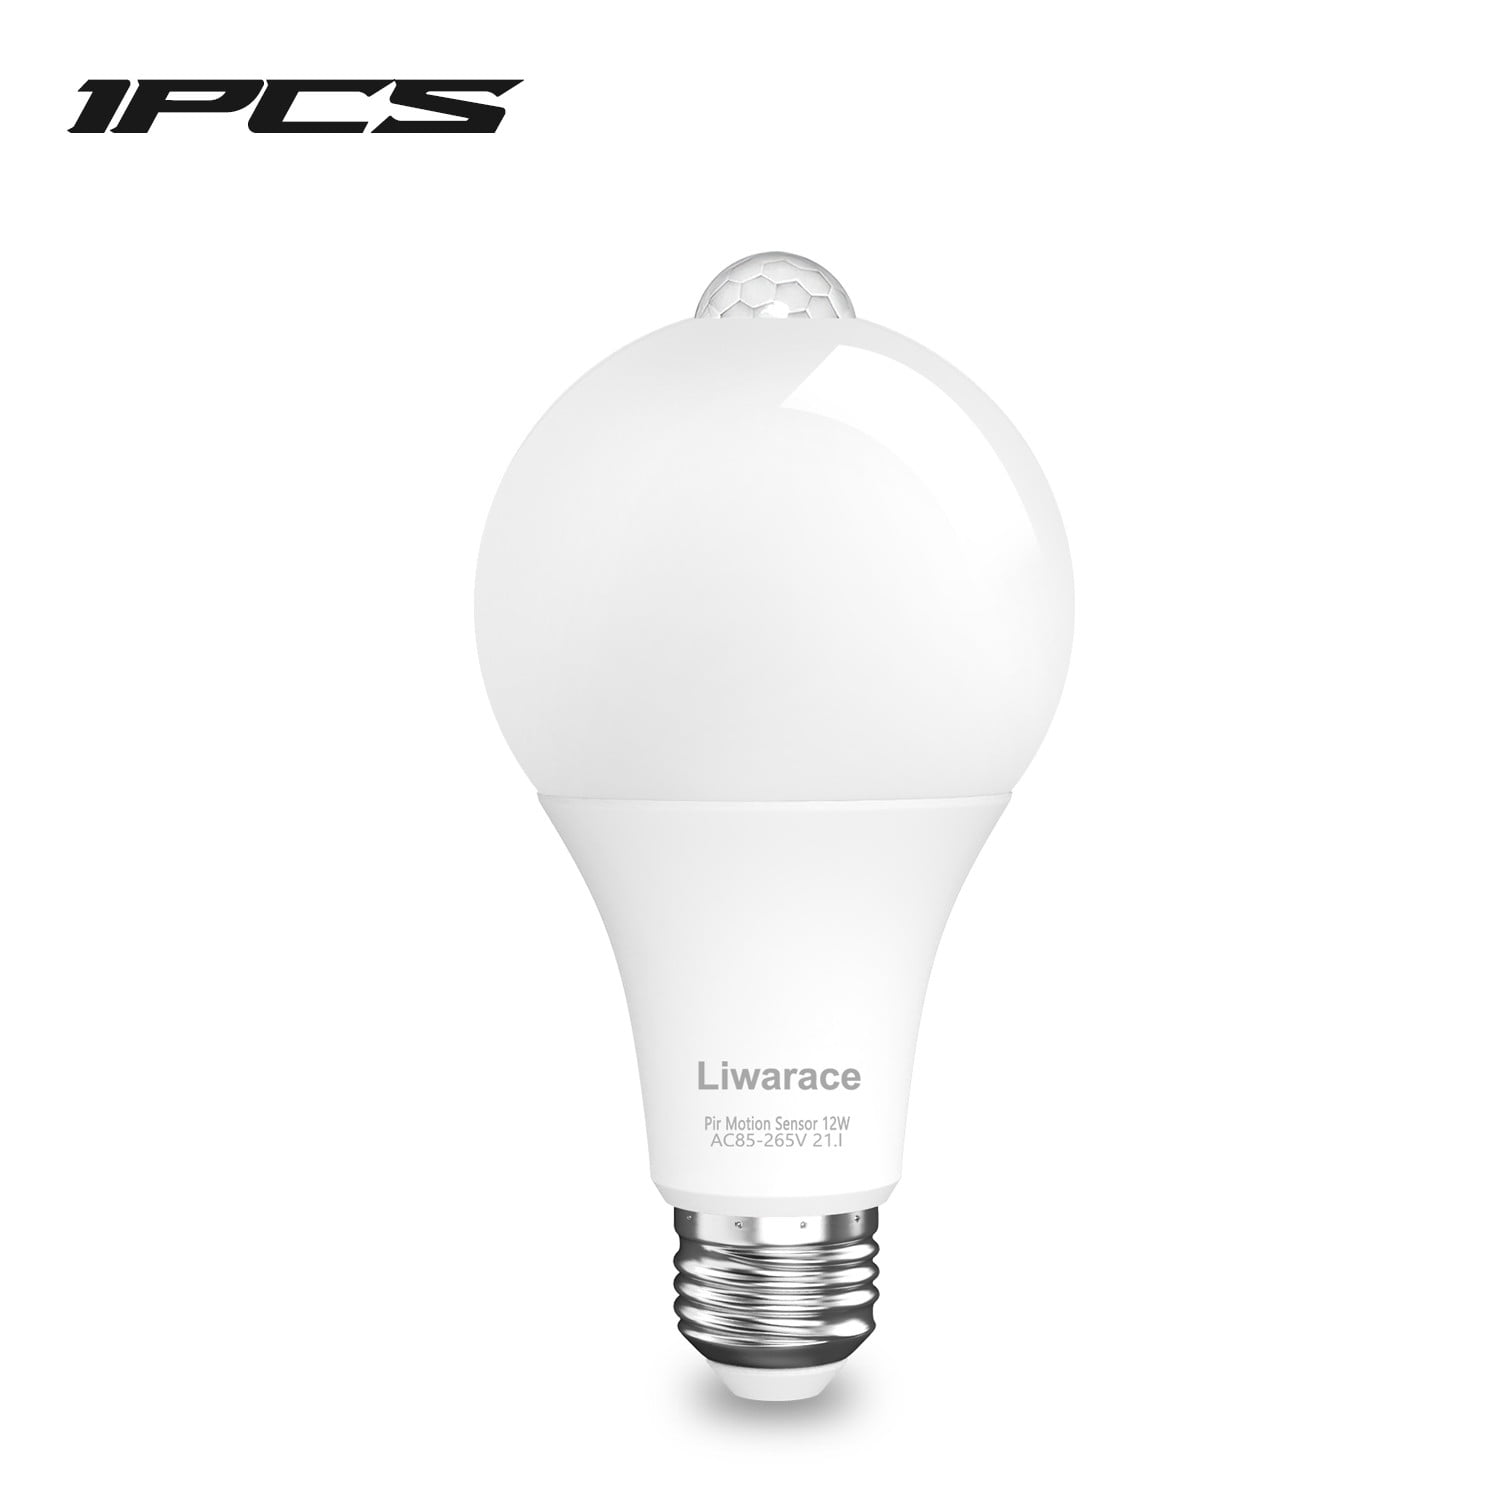 Auto PIR Motion Sensor 120W 90W Equivalent LED Light Bulb Clear White A19 E27 